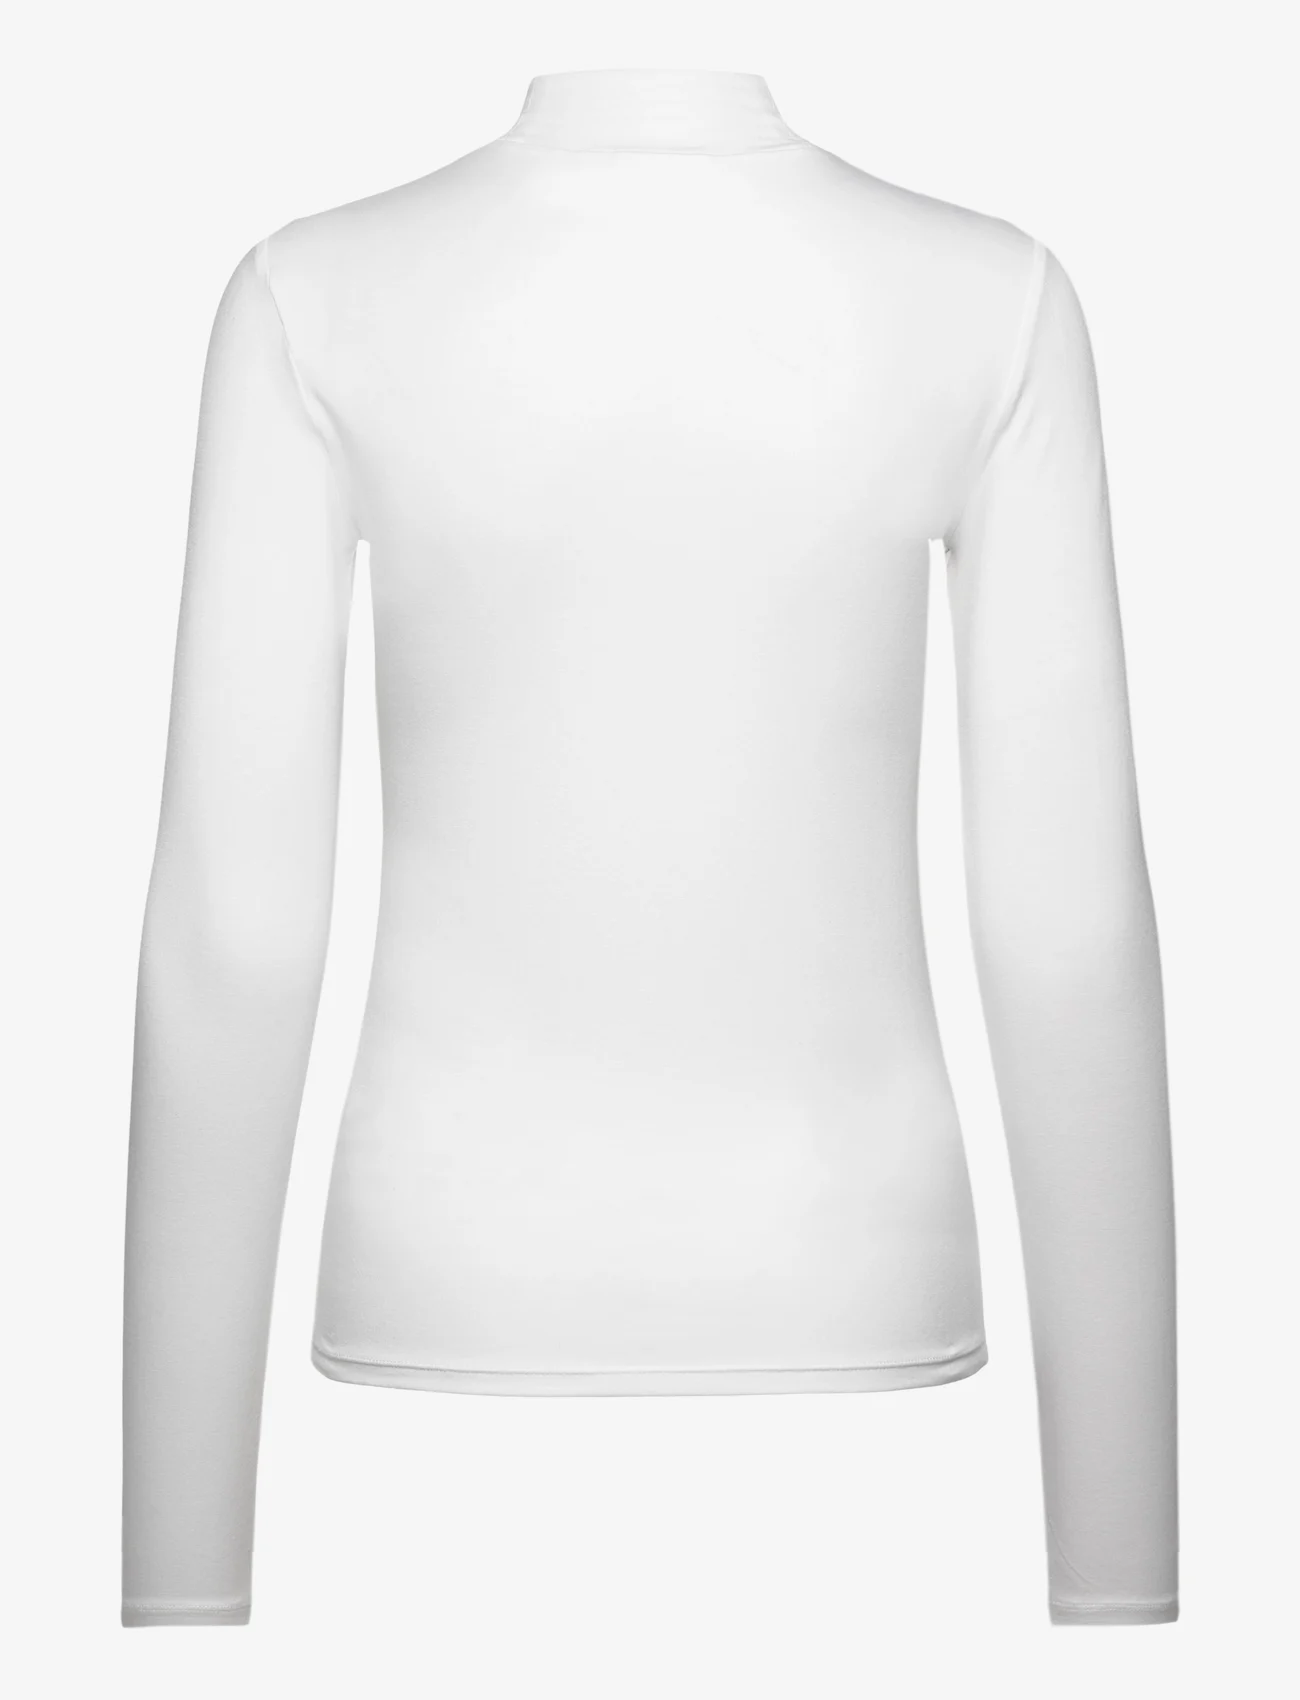 Calvin Klein - COTTON MODAL MOCK NECK LS TOP - long-sleeved tops - bright white - 1